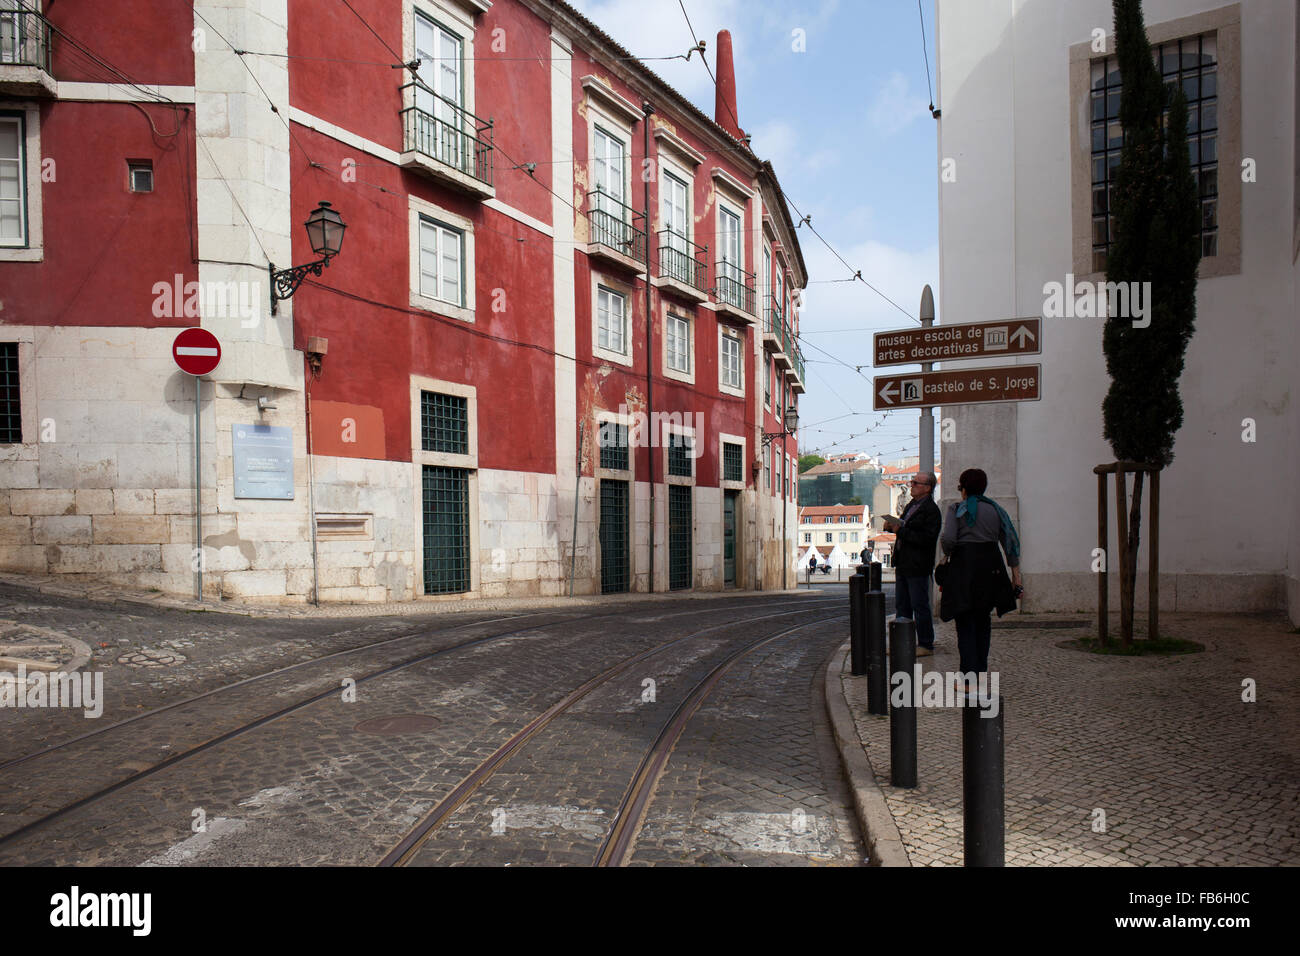 Largo Santa Luzia street in the city of Lisbon, Portugal Stock Photo